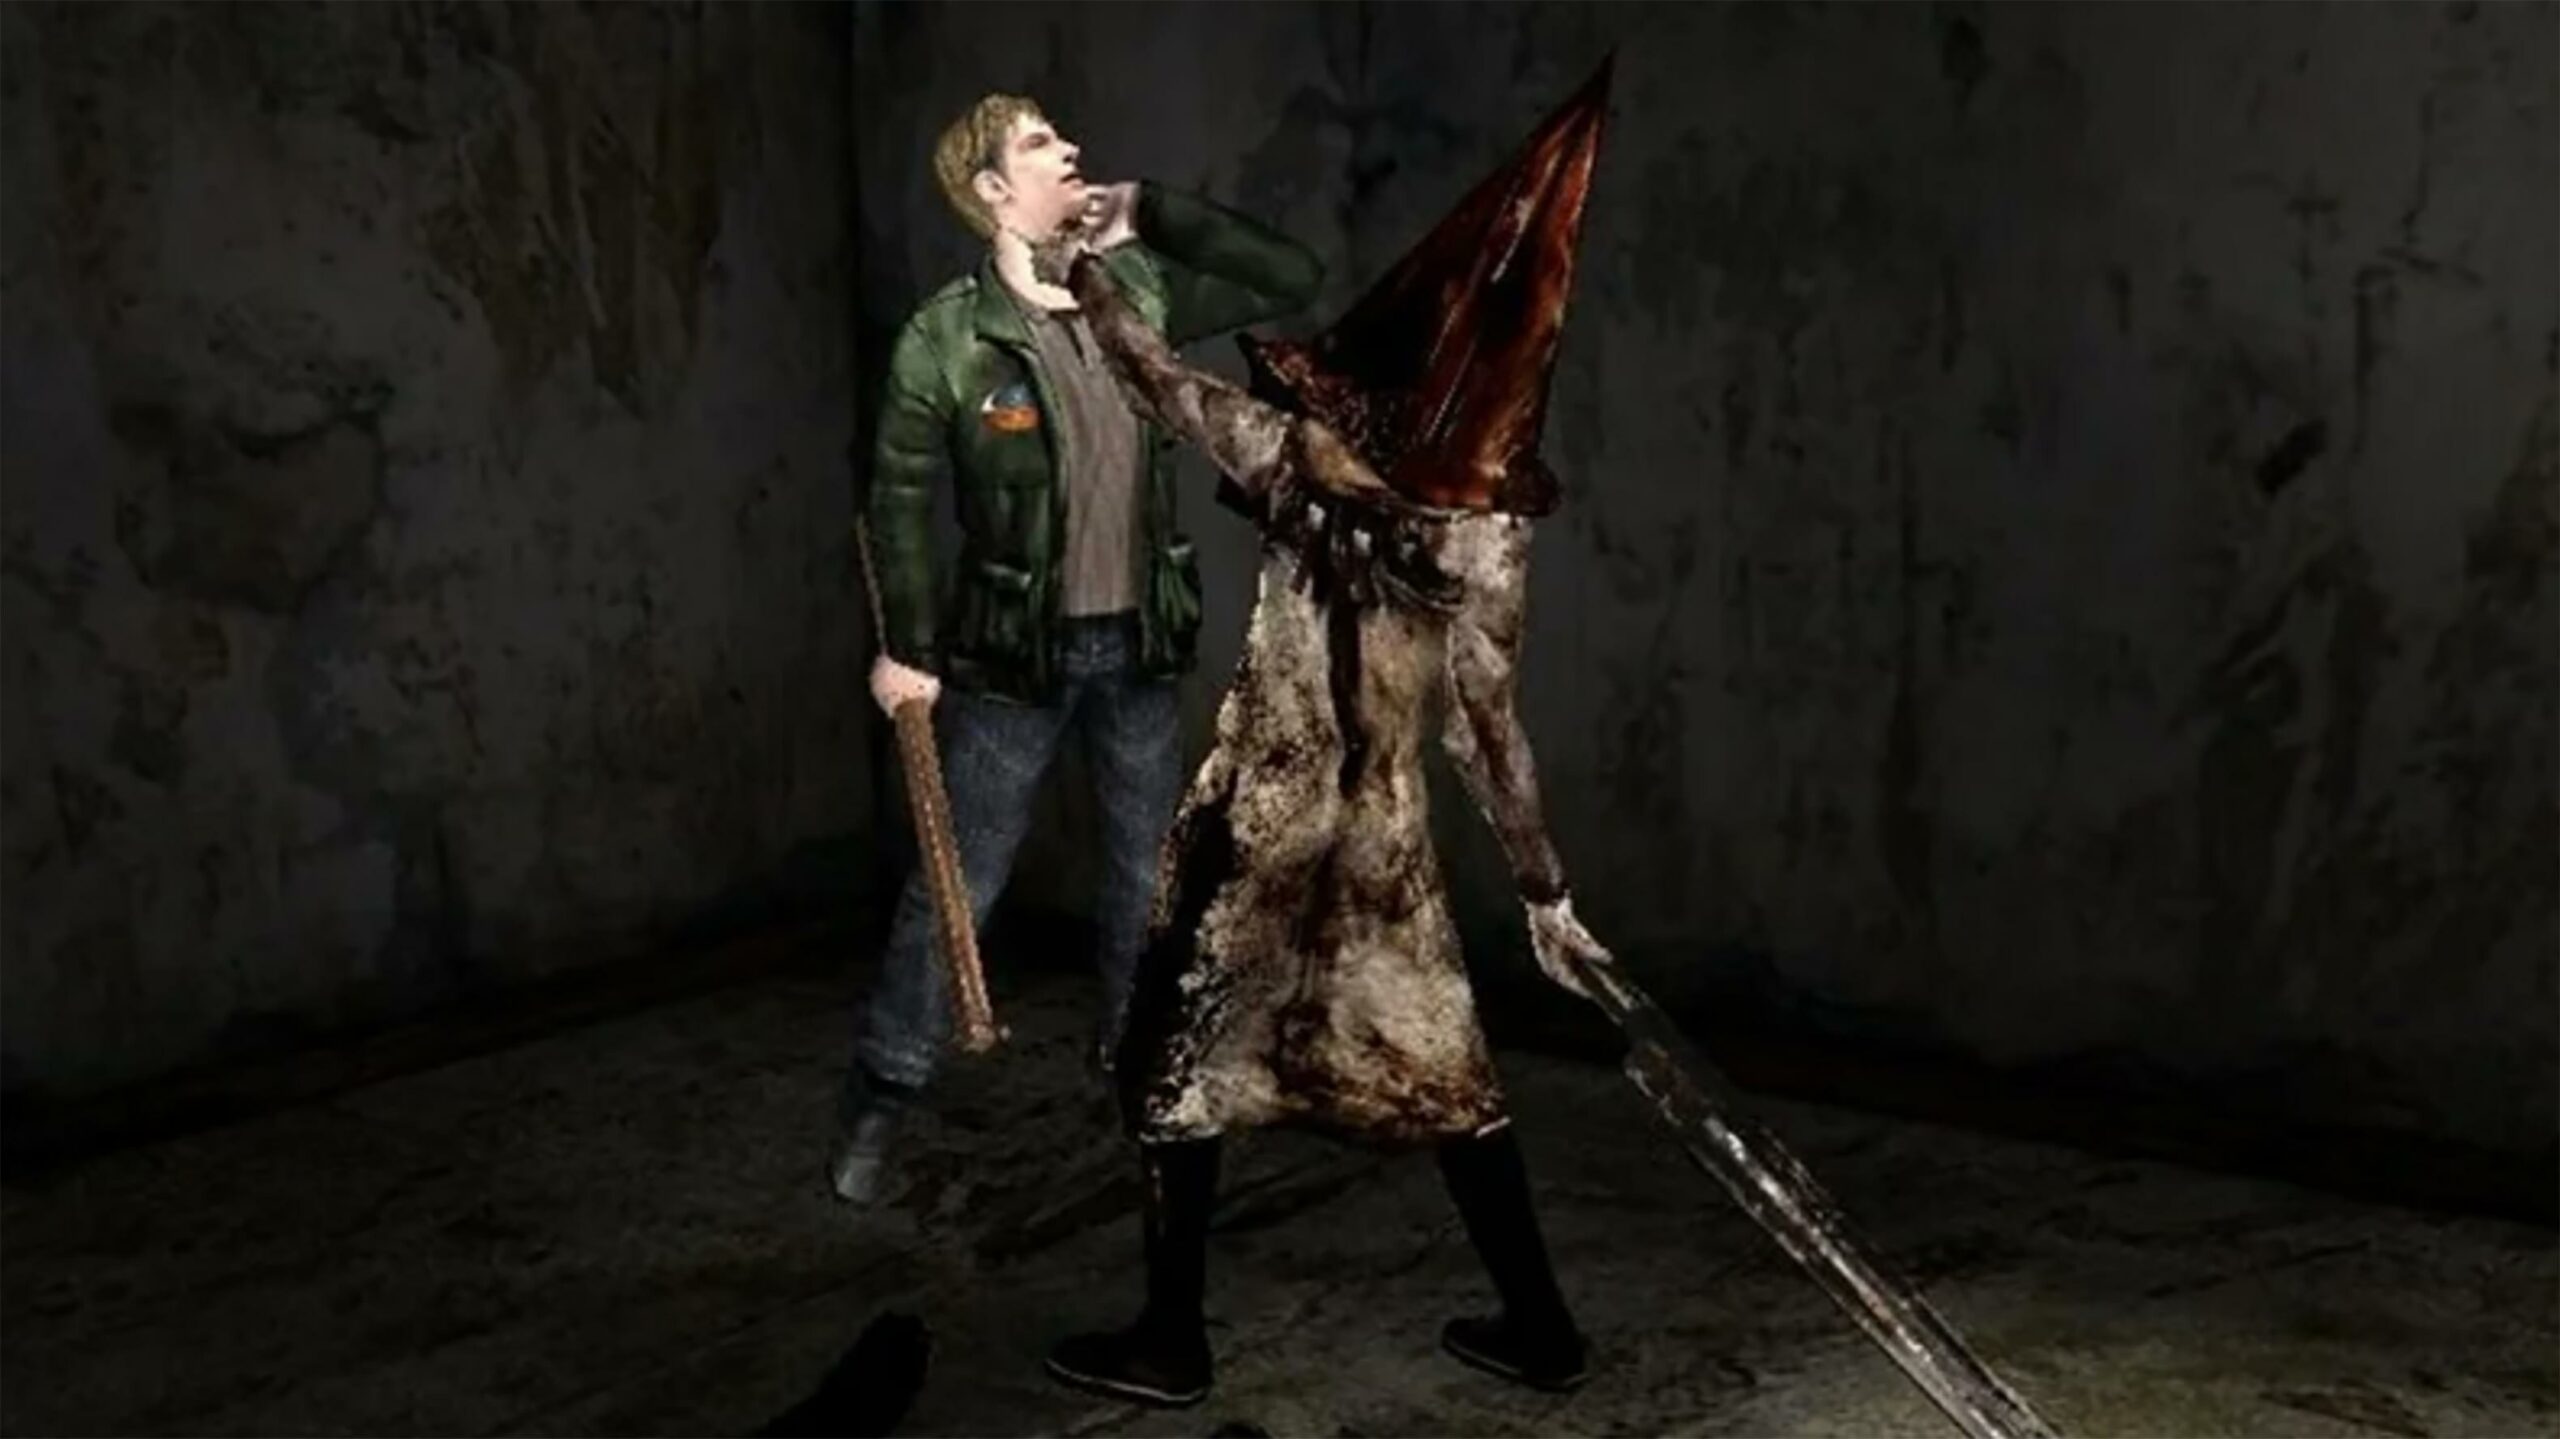 Silent Hill 2 -- Pyramid Head grabs James